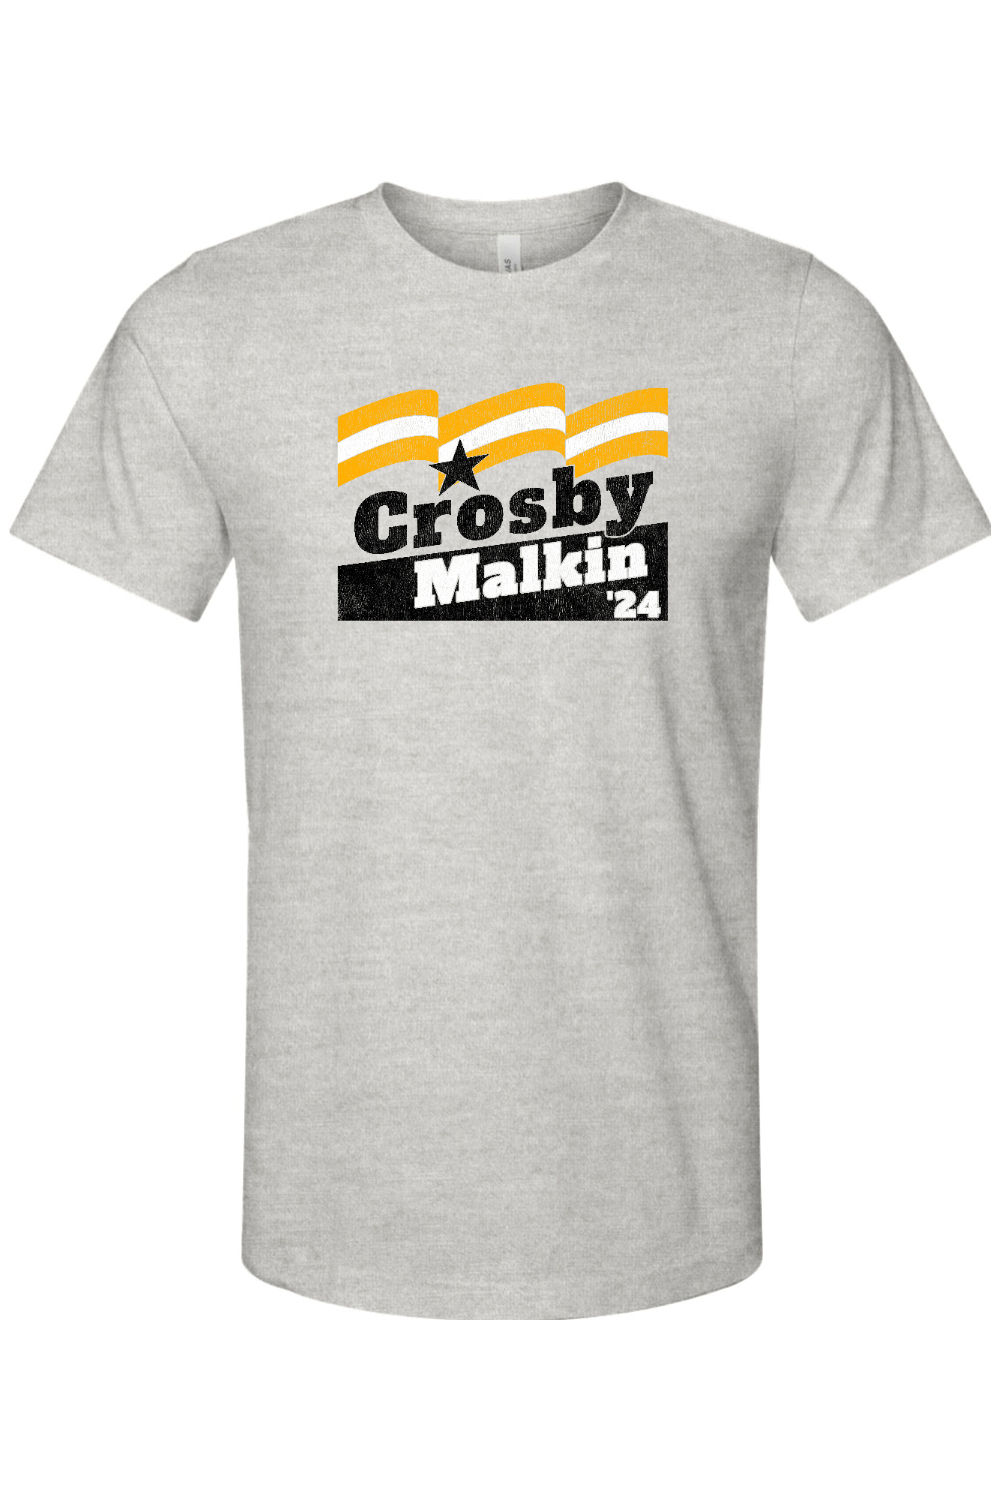 Crosby Malkin '24 - Yinzylvania